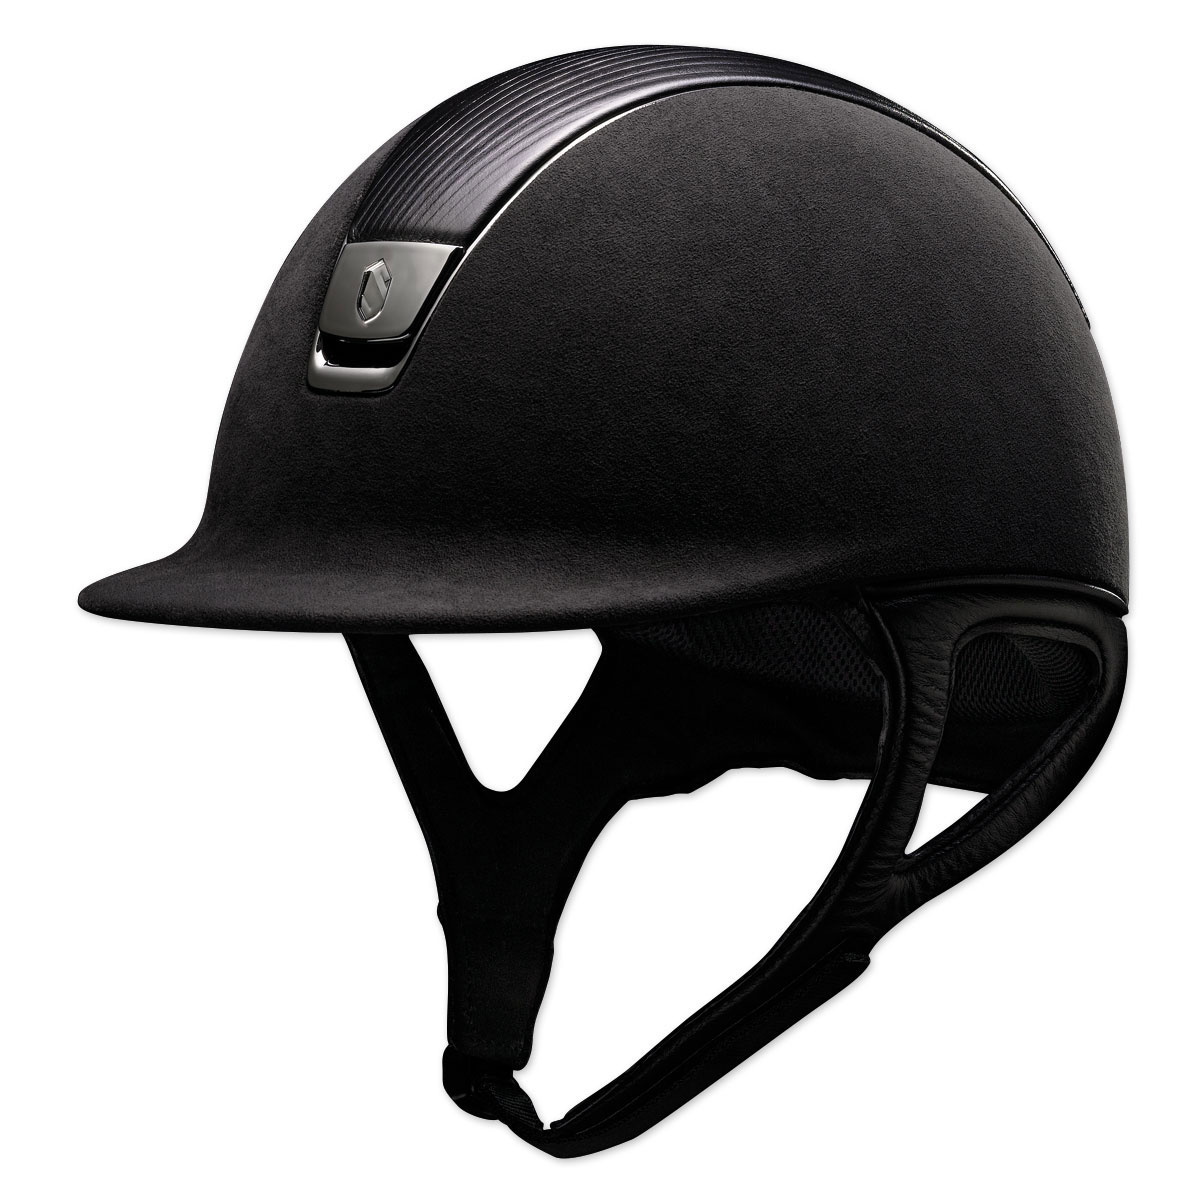 Samshield Premium Helmet - Clearance!